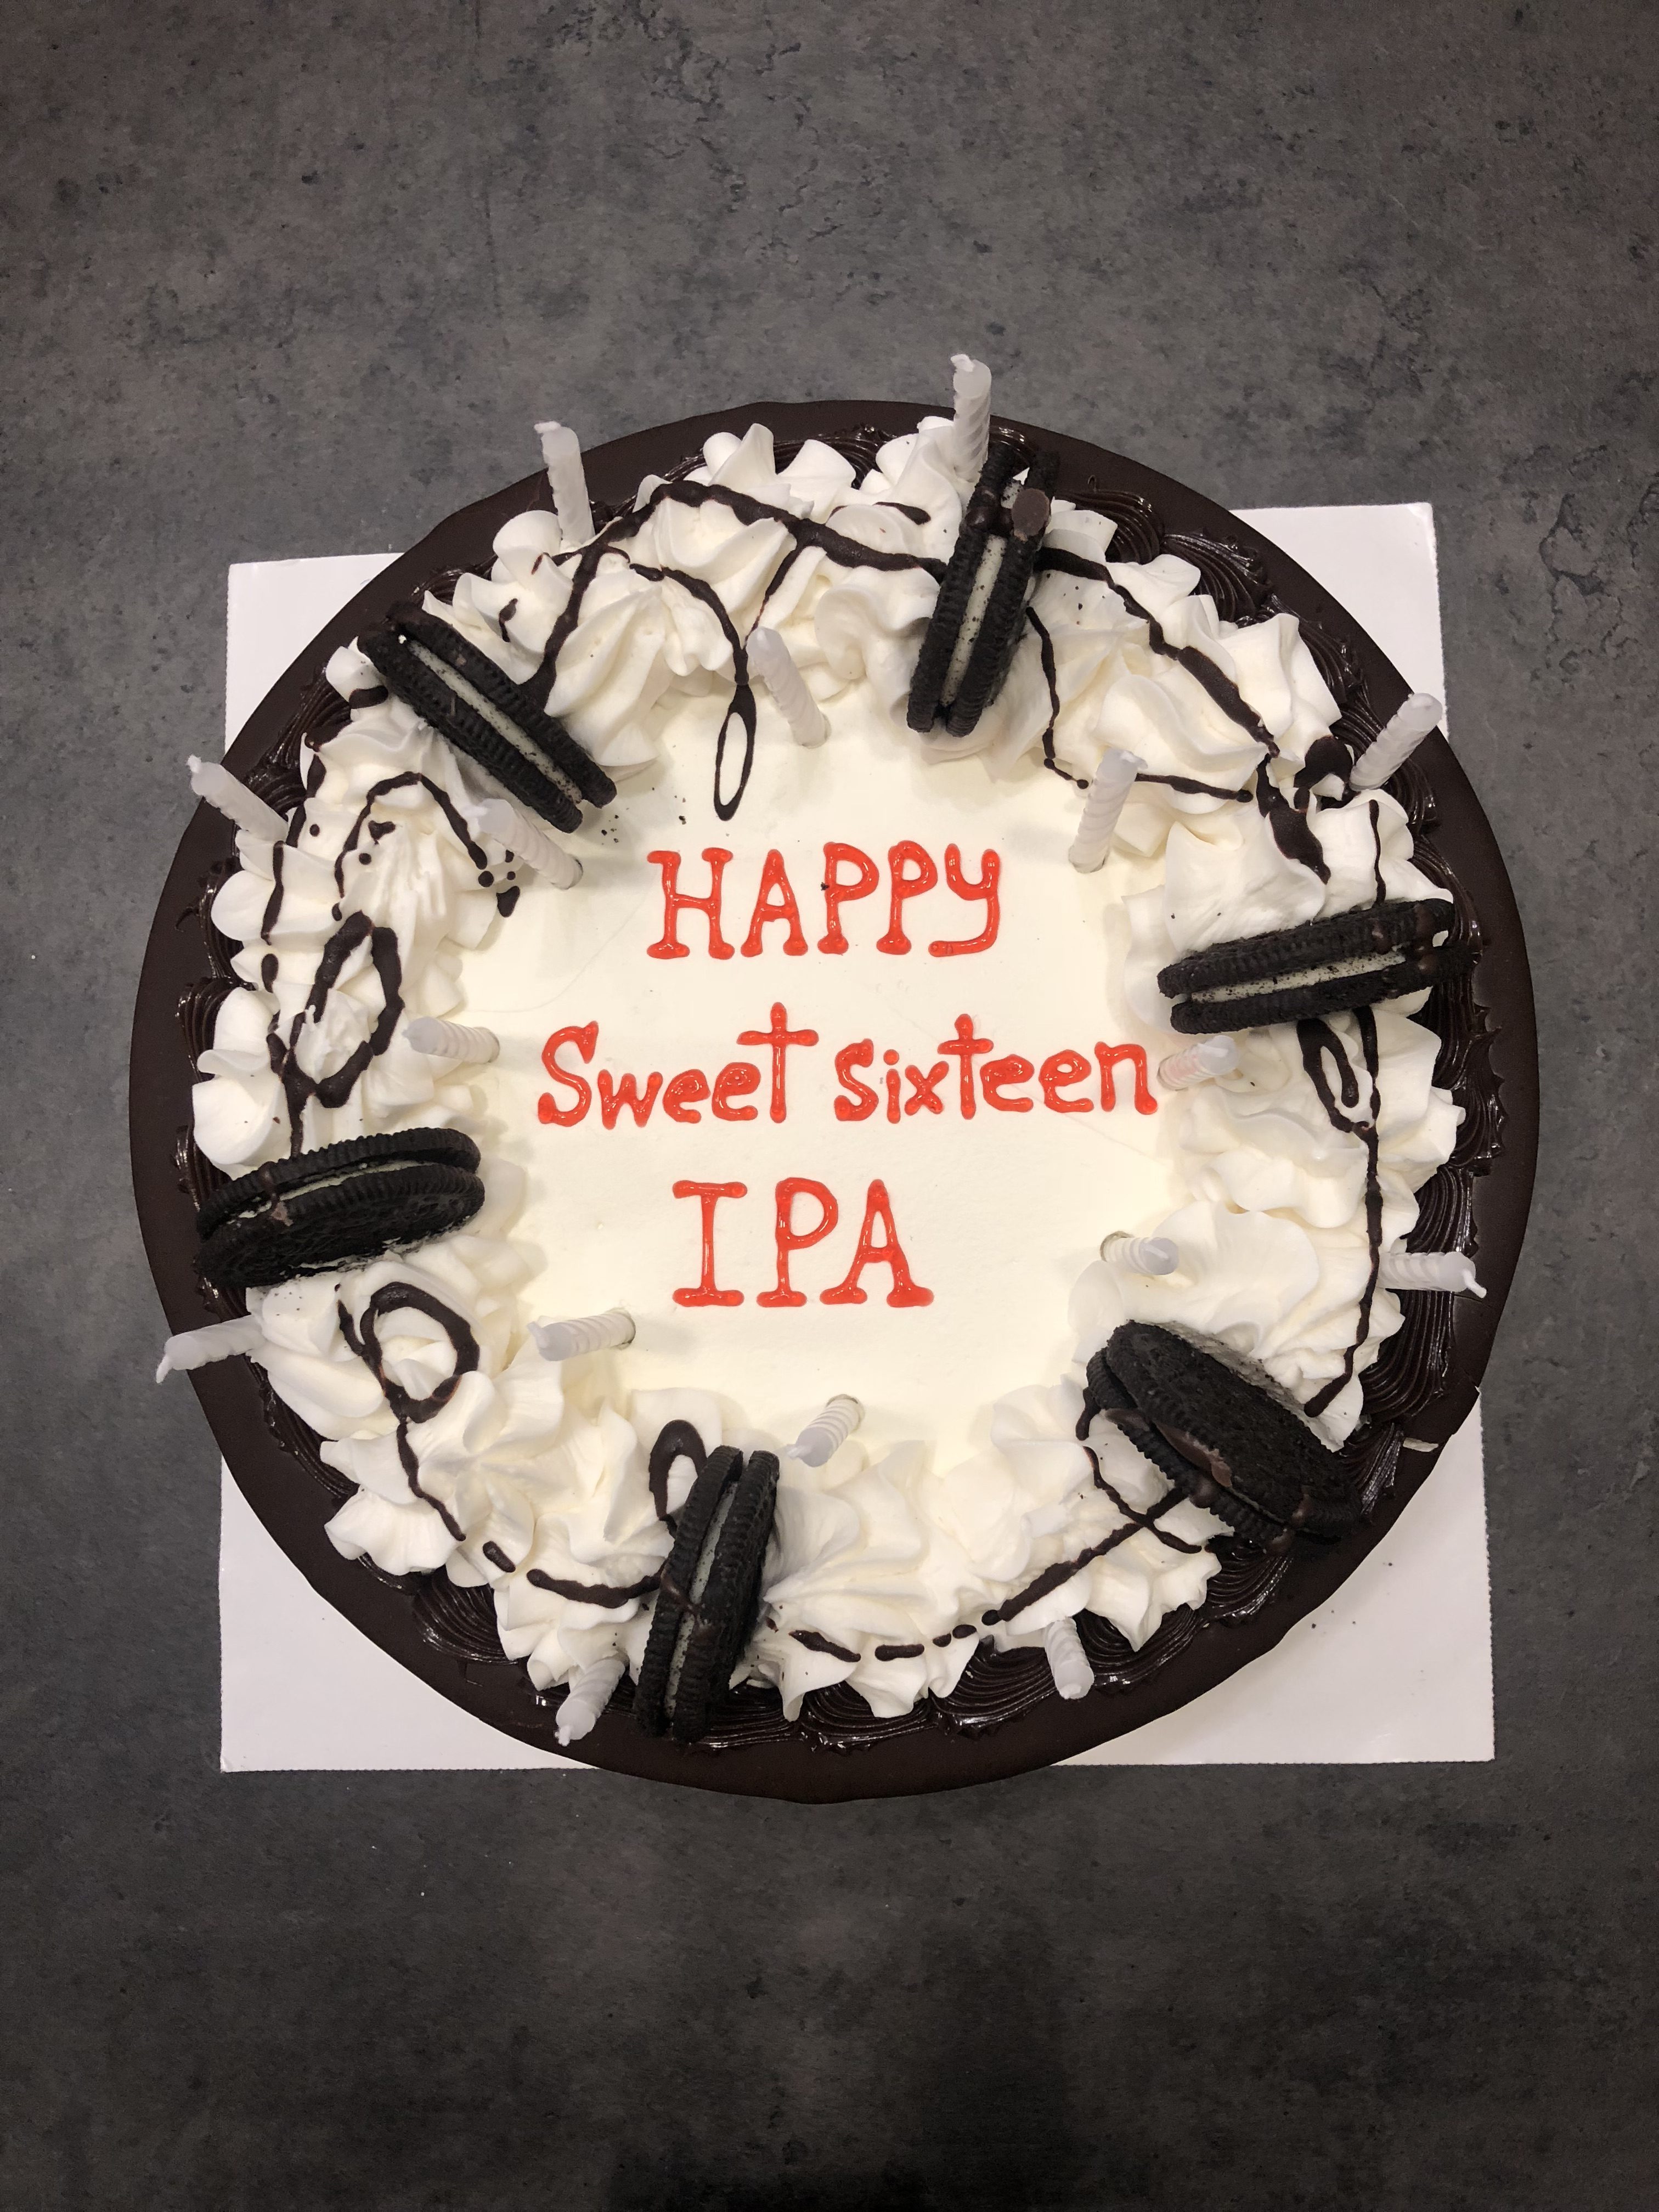 IPA 16 years old cake